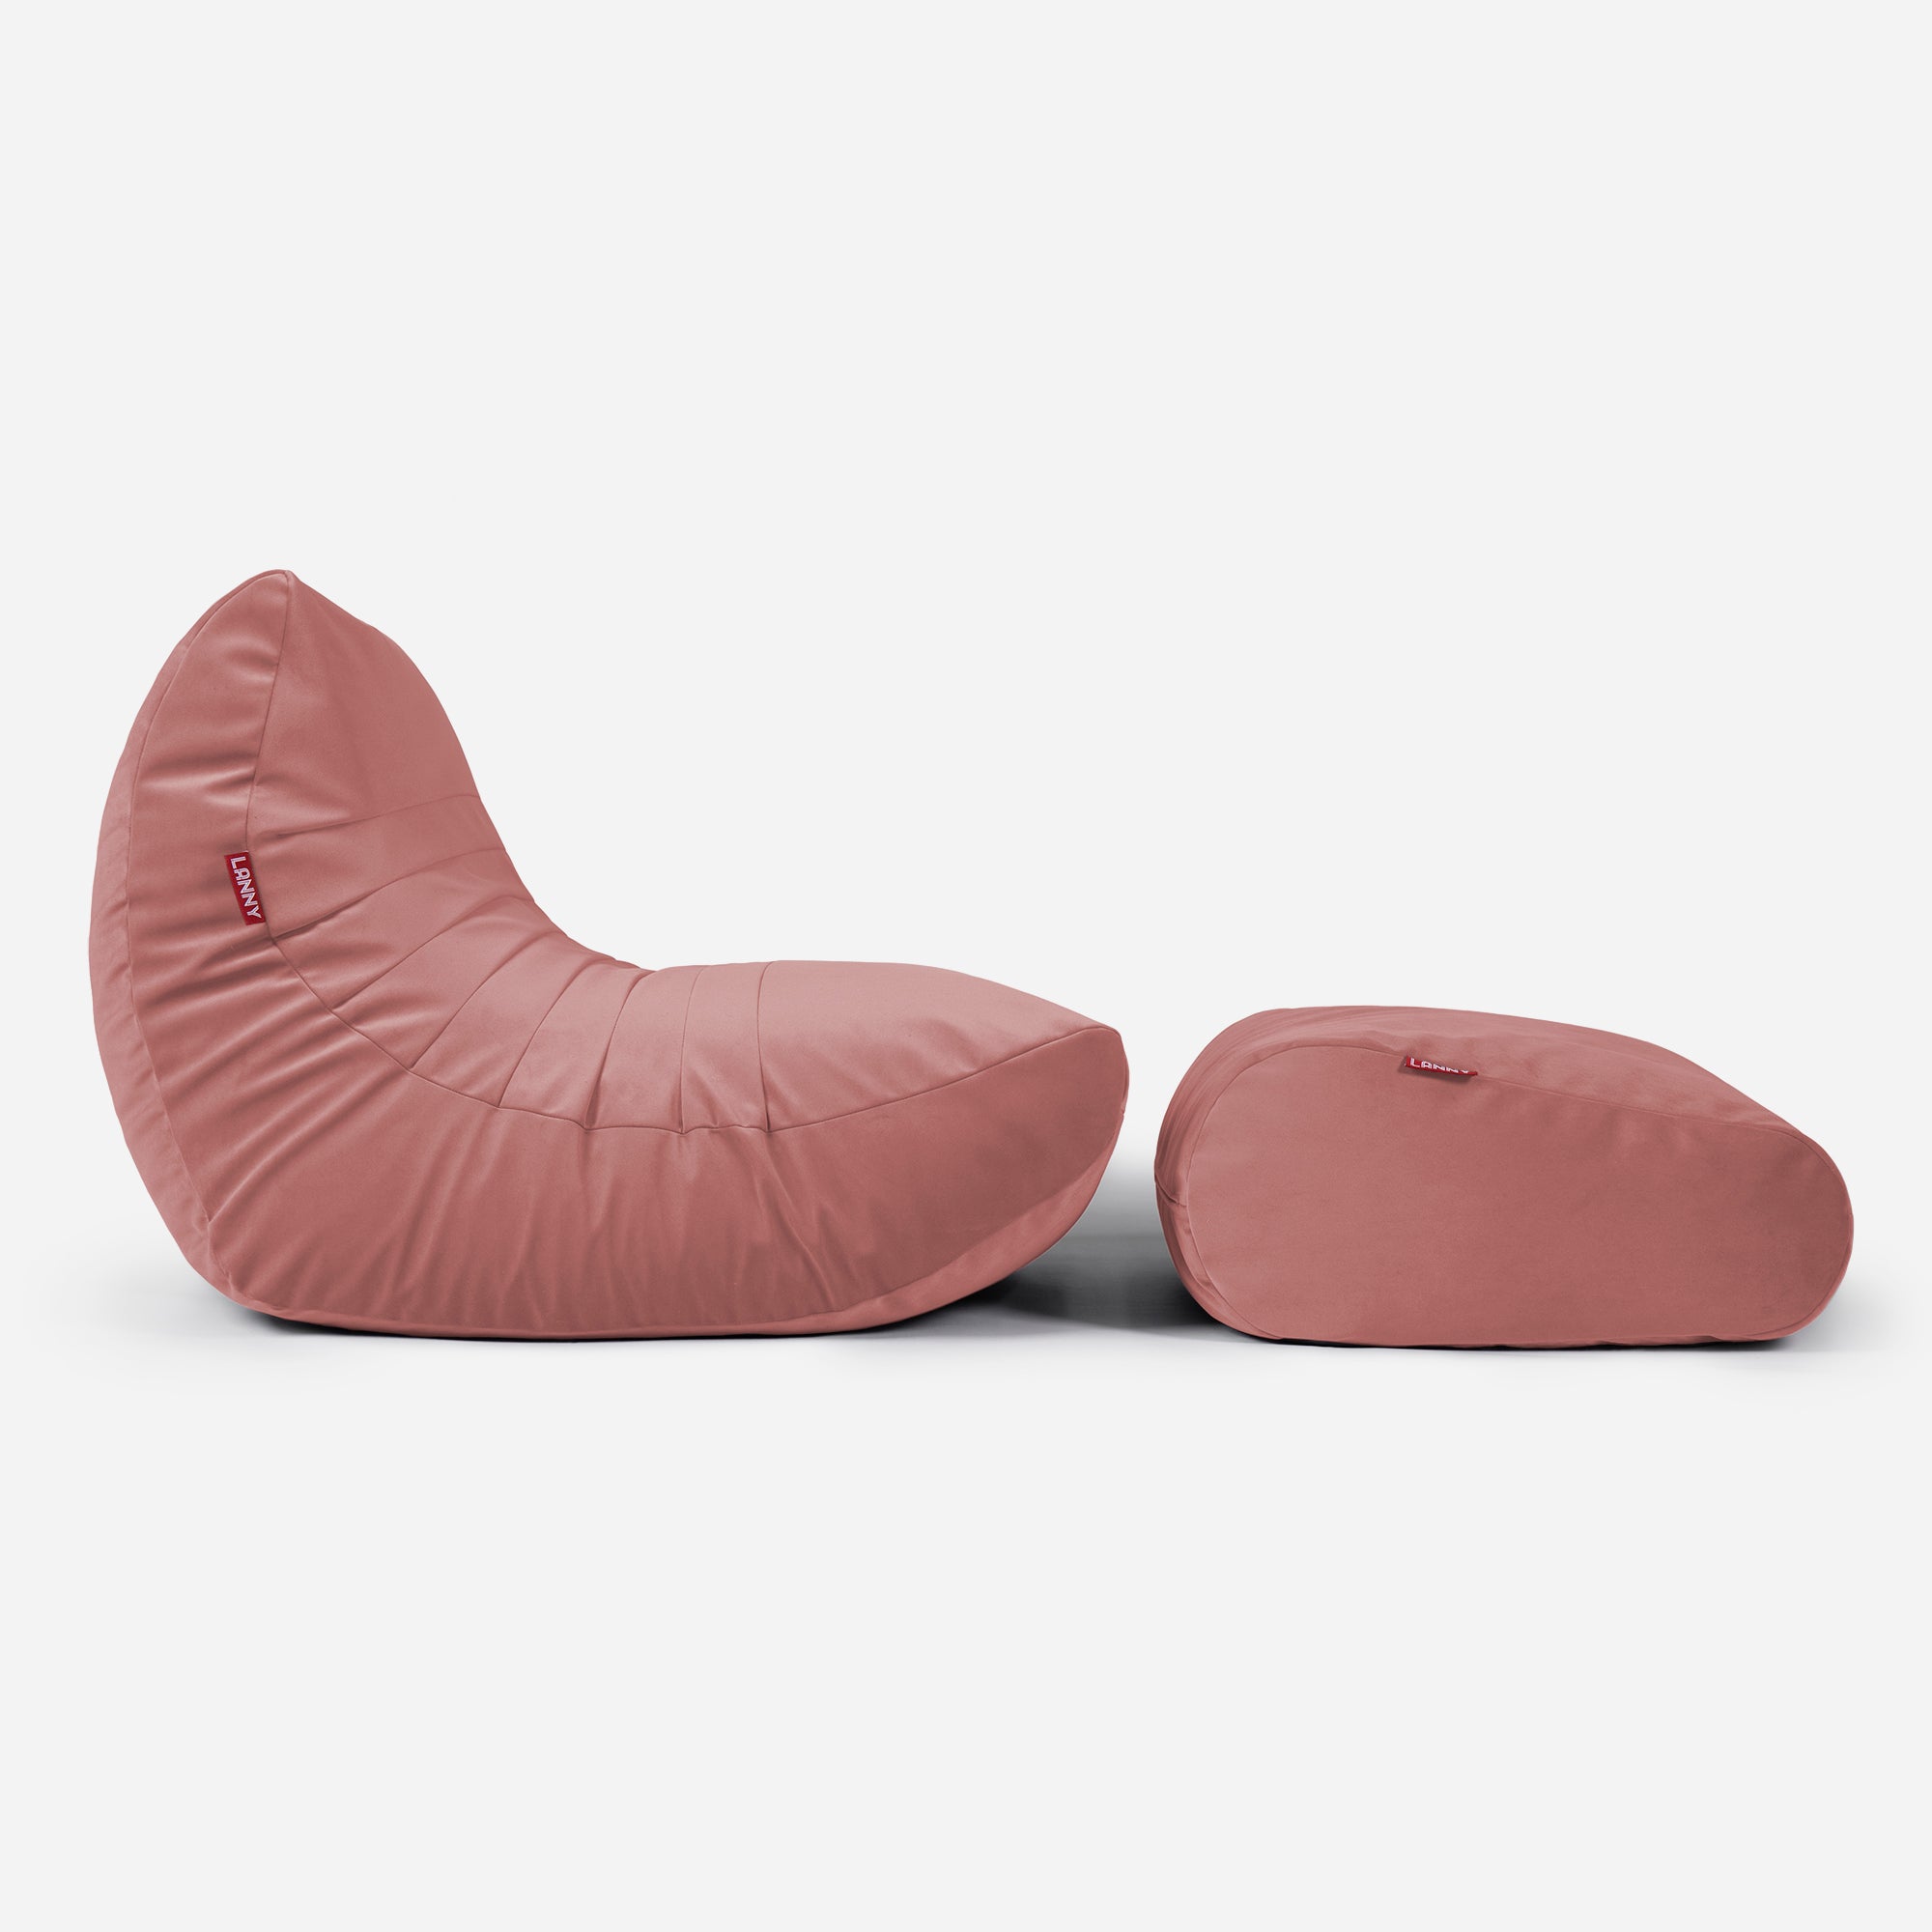 Beanbag Curvy Design Pink color